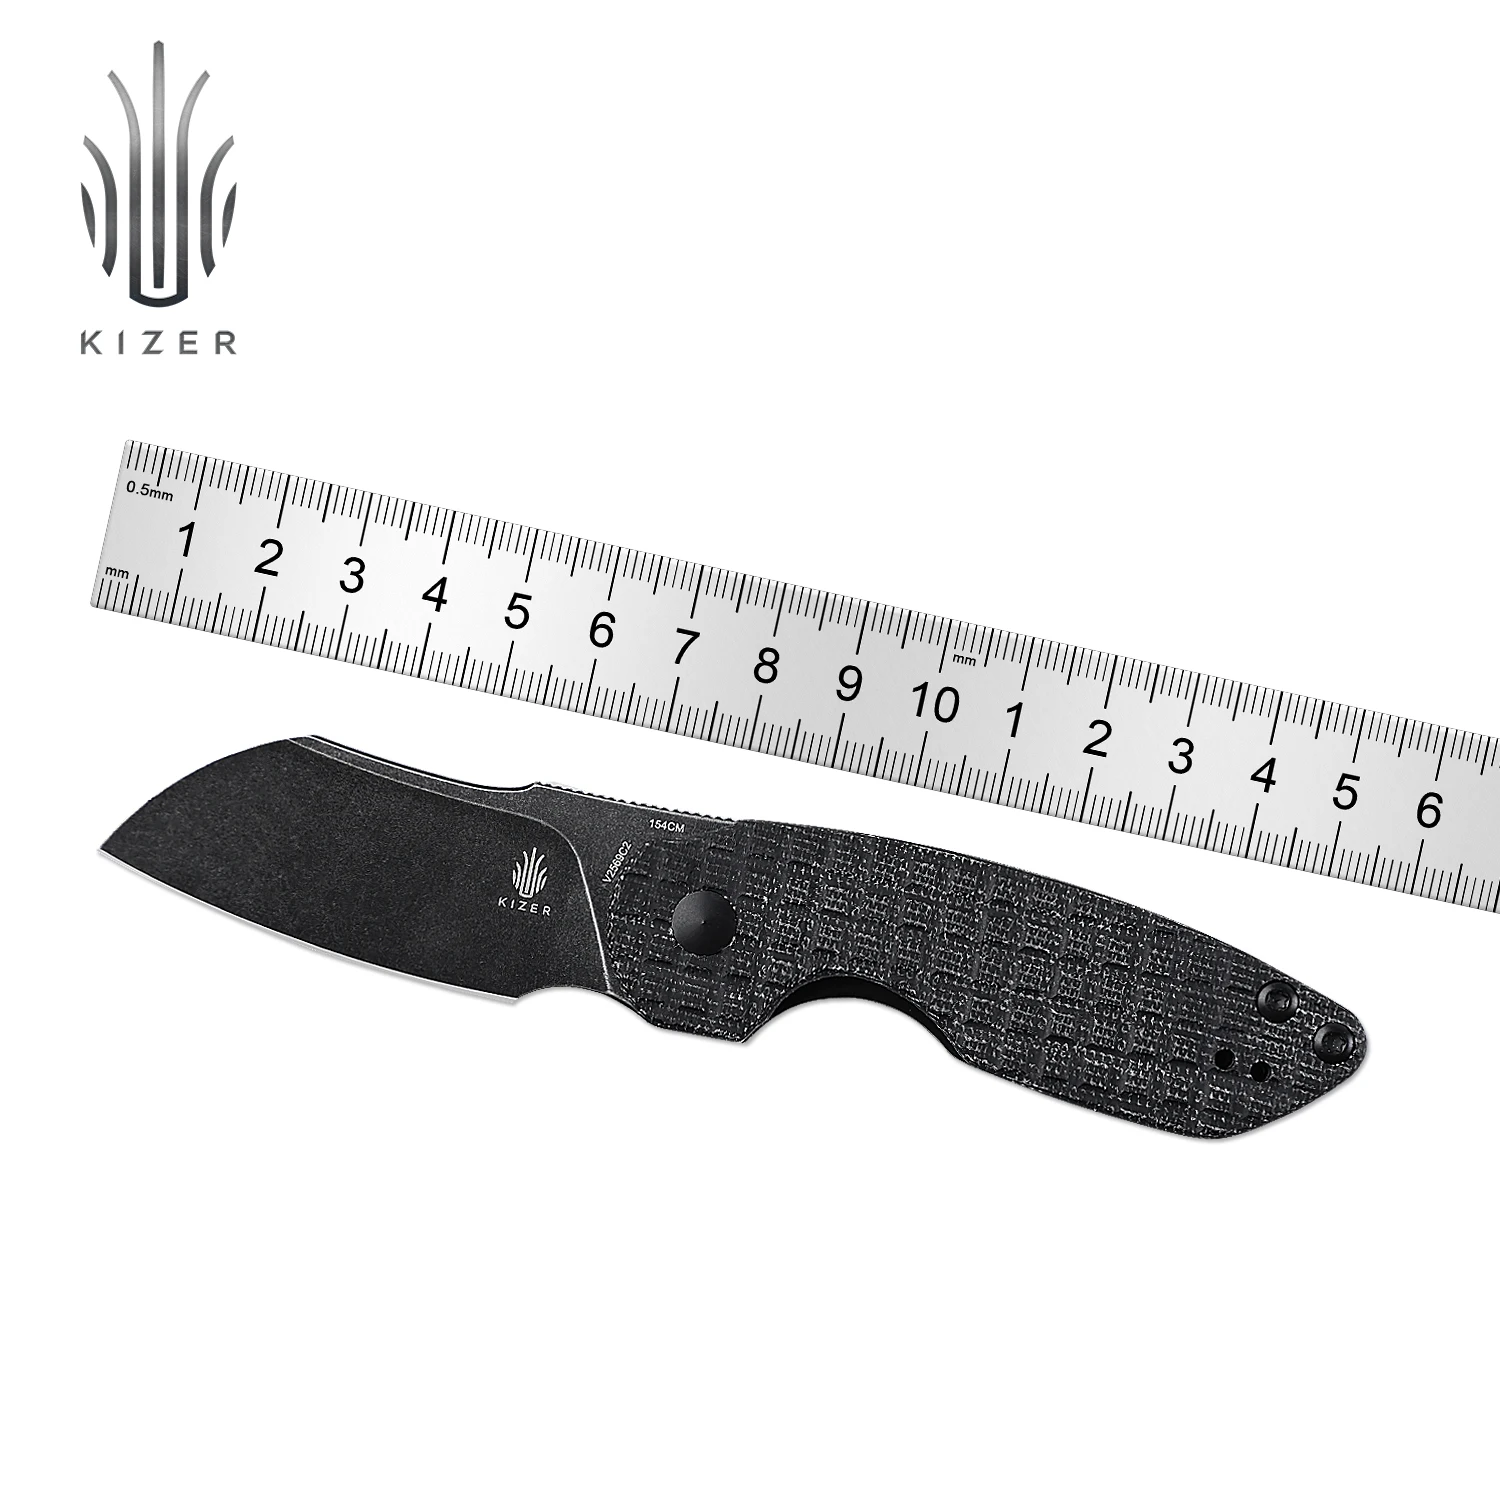 Kizer Folding Knife OCTOBER Mini V2569C2 2022 New Ball Bearing Pocket Knife with Black Micarta Handle High Quality Survival Tool